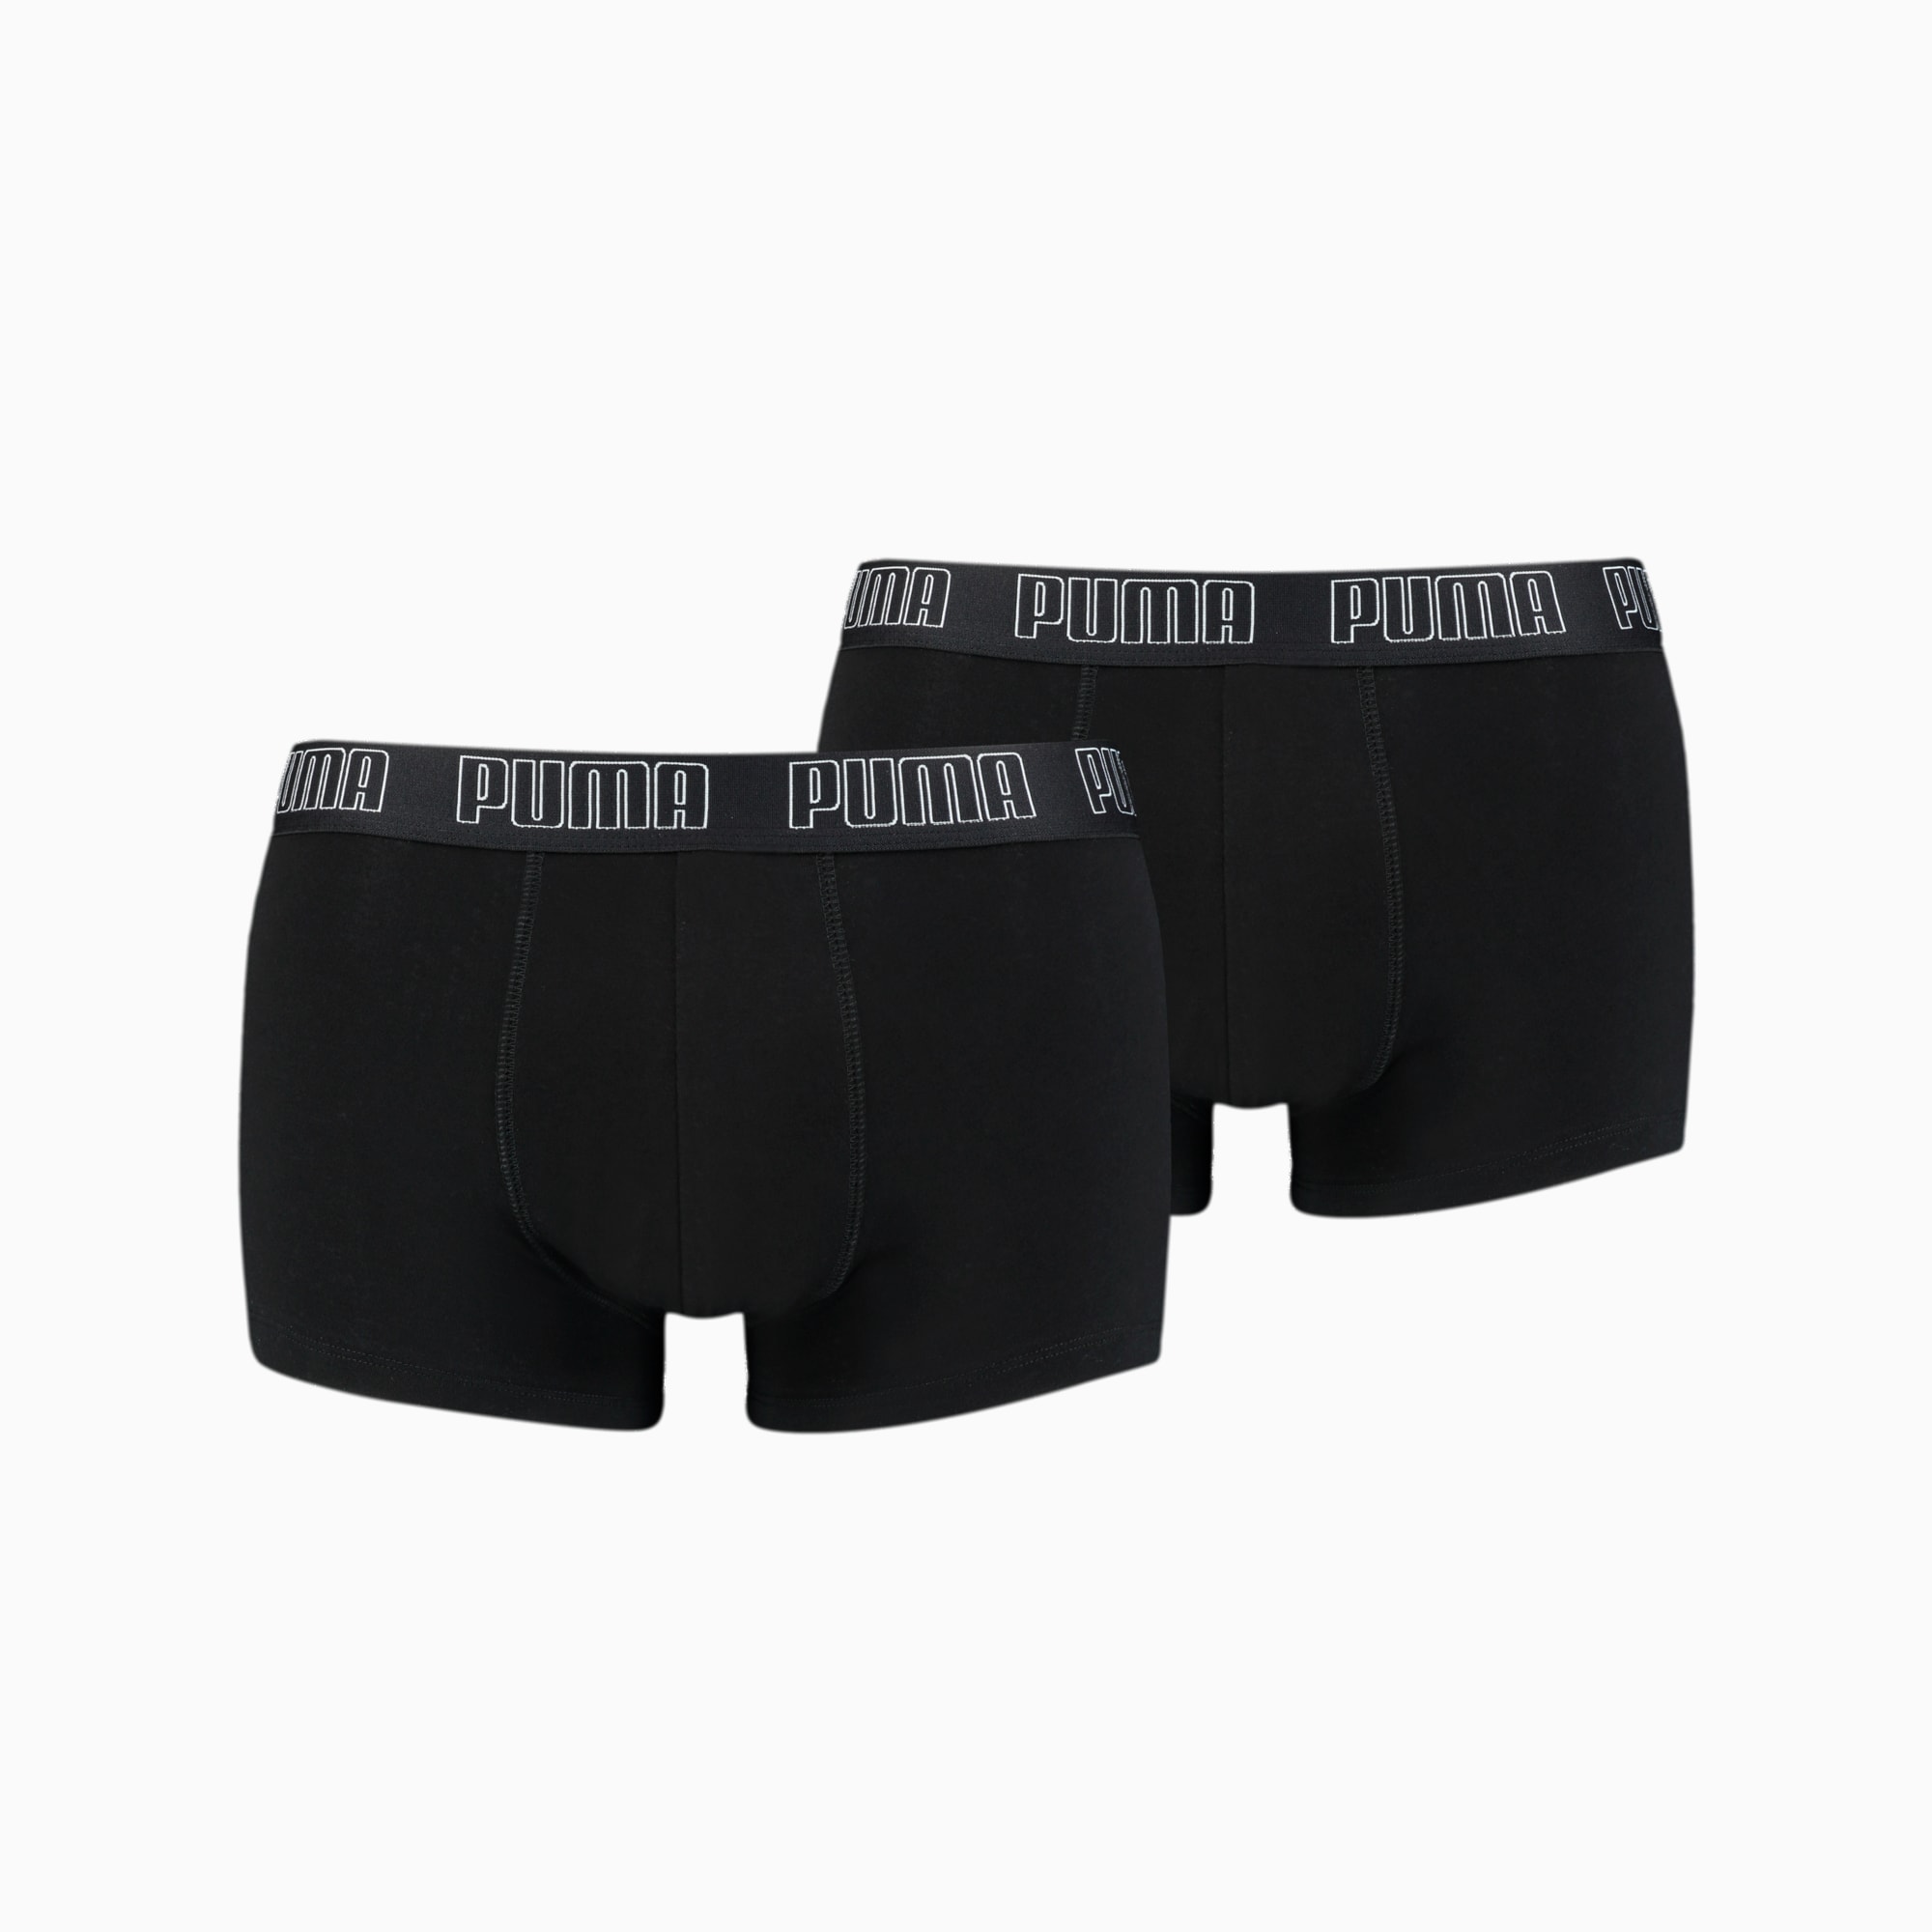 PUMA Basic Men's Trunks 2 Pack, Black, Size L, Clothing